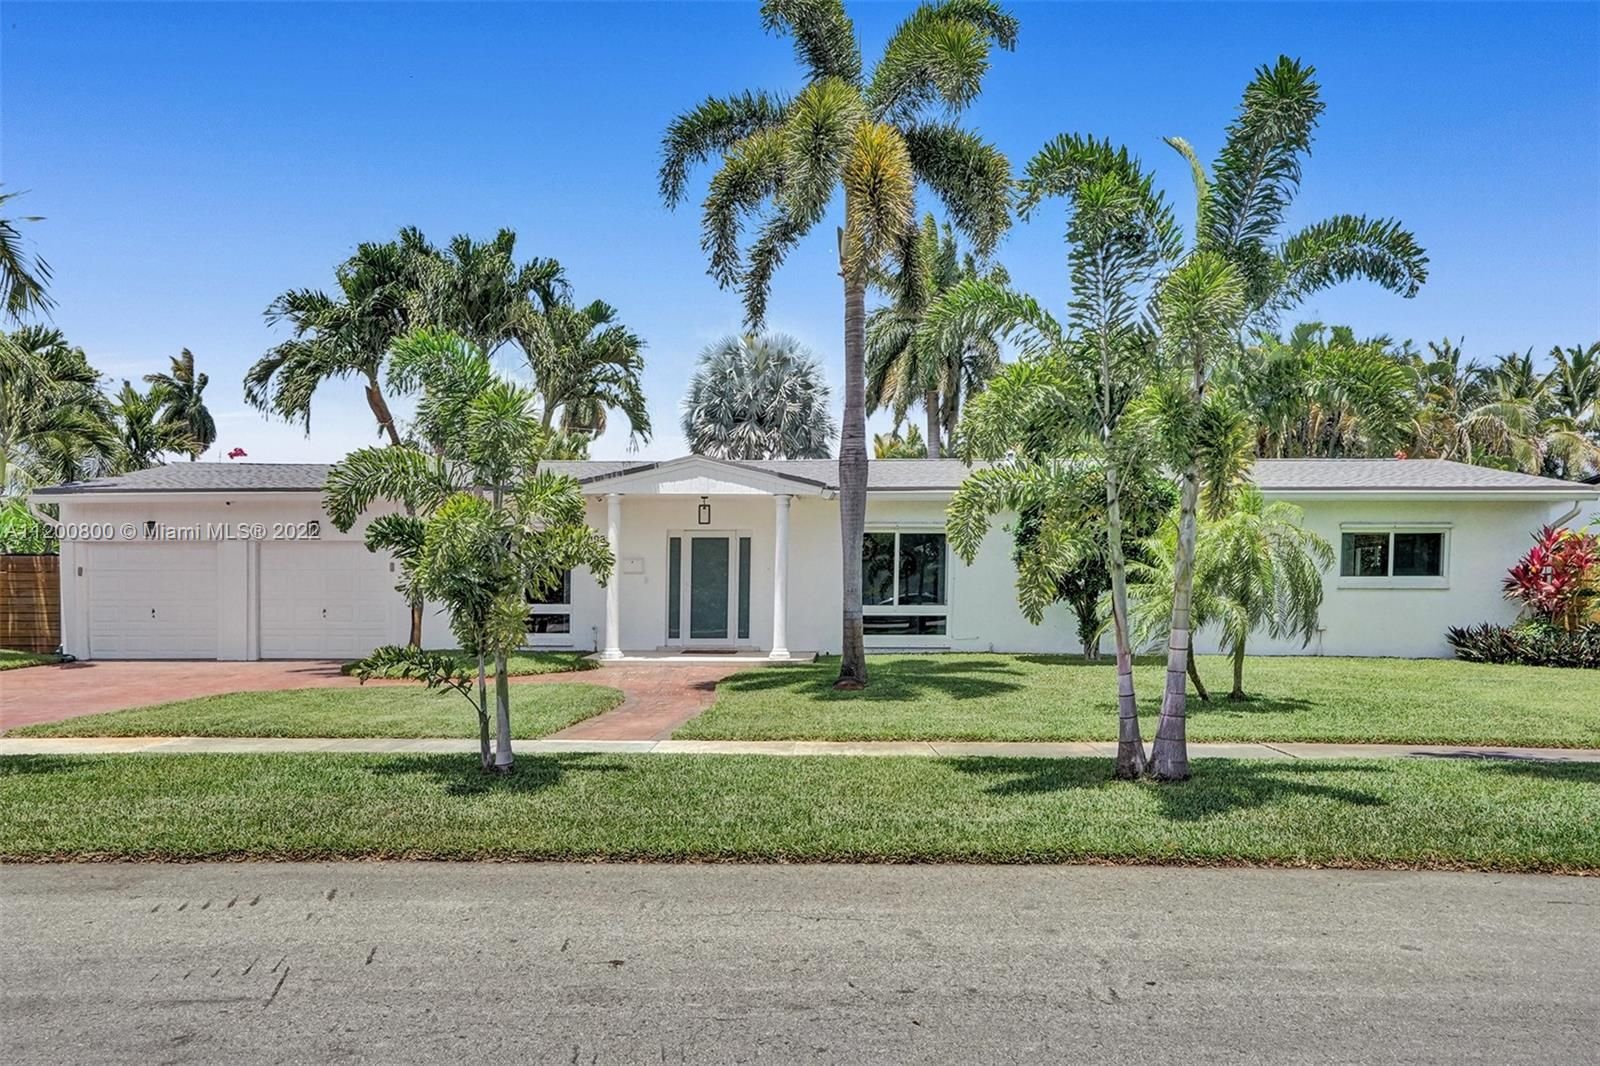 Real estate property located at 1981 196th Ter, Miami-Dade County, Miami, FL